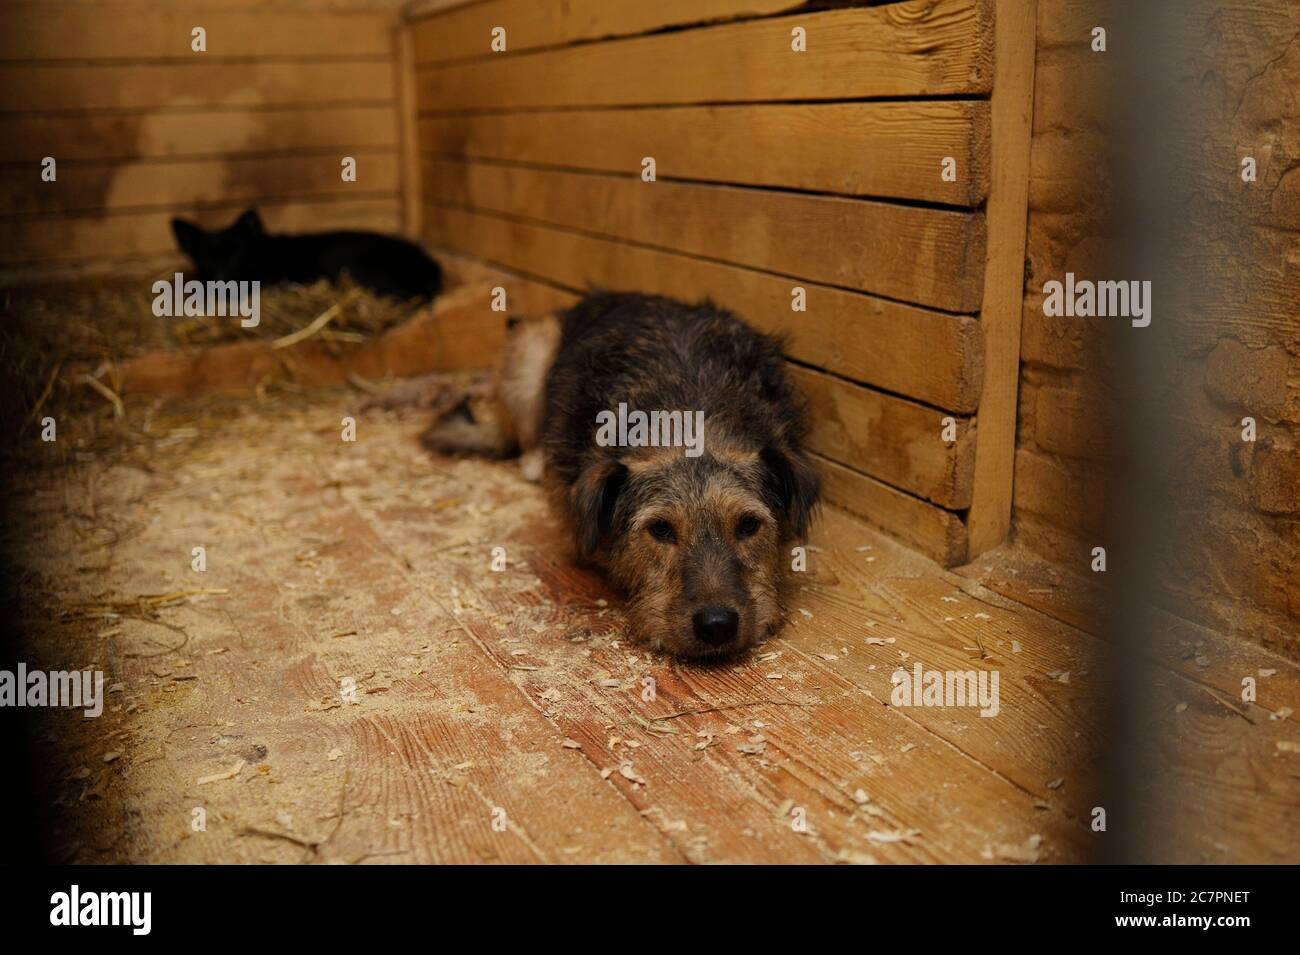 Animal abuse. Sad stray dog sitting behind bars in the aviary Stock Photo